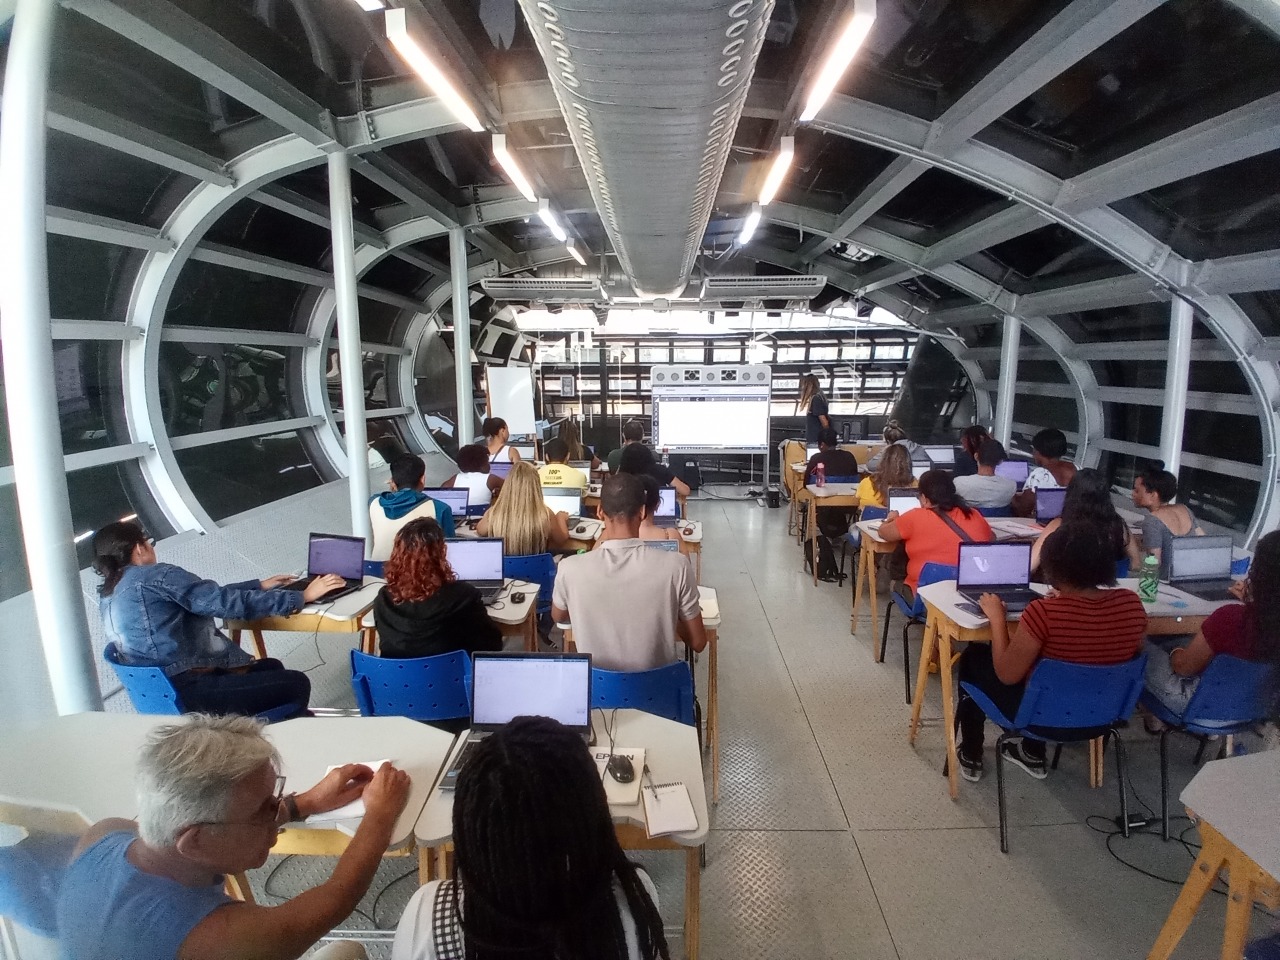 Naves do Conhecimento opens registration for 3,000 places in free technology and entrepreneurship courses – Rio de Janeiro City Hall